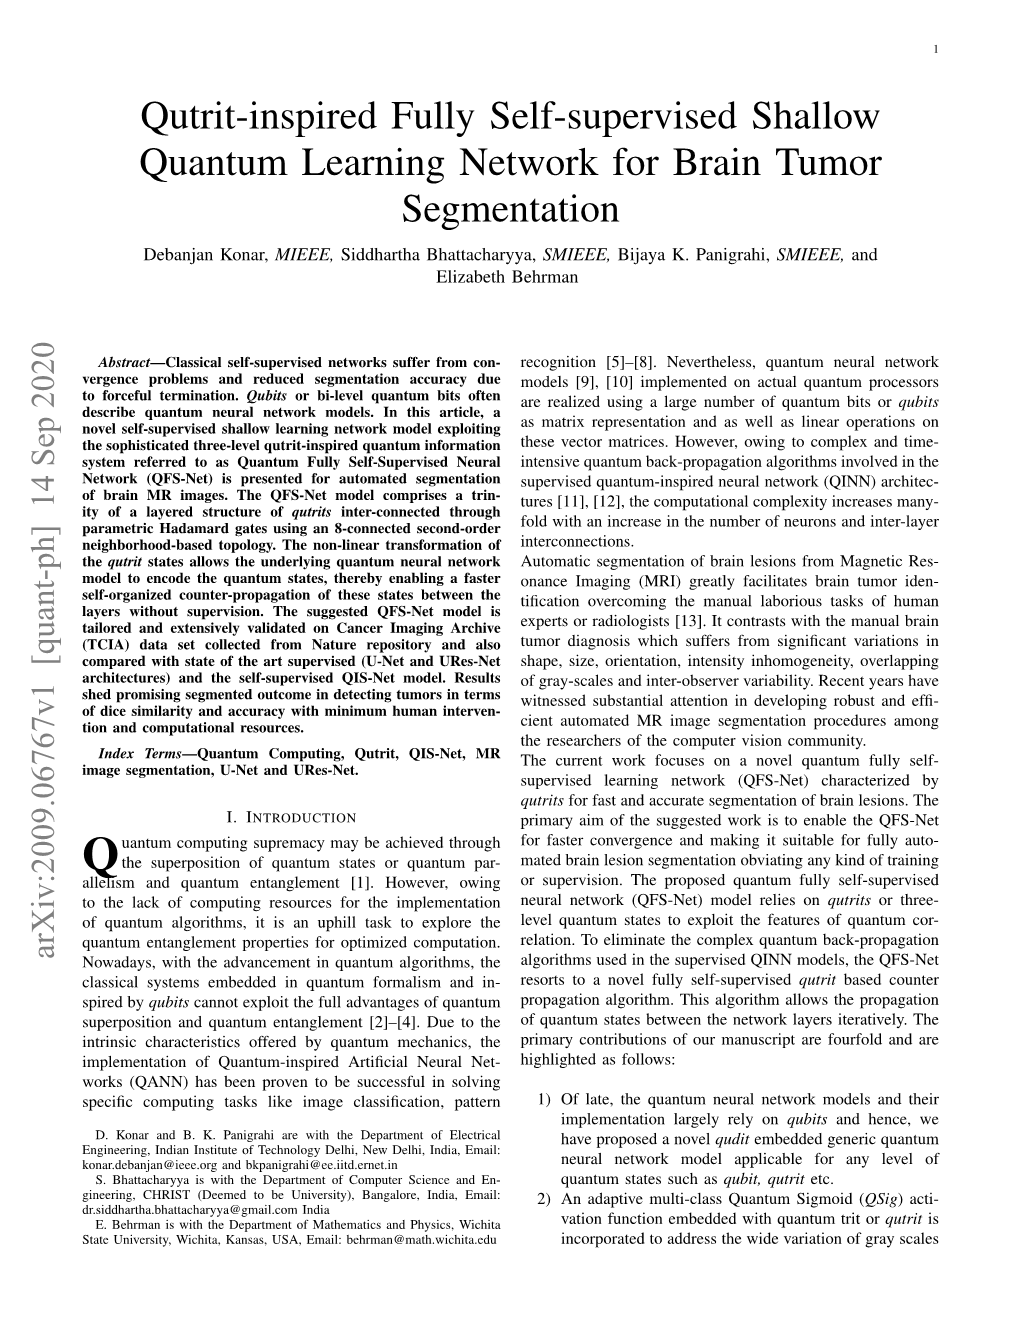 Qutrit-Inspired Fully Self-Supervised Shallow Quantum Learning Network for Brain Tumor Segmentation Debanjan Konar, MIEEE, Siddhartha Bhattacharyya, SMIEEE, Bijaya K